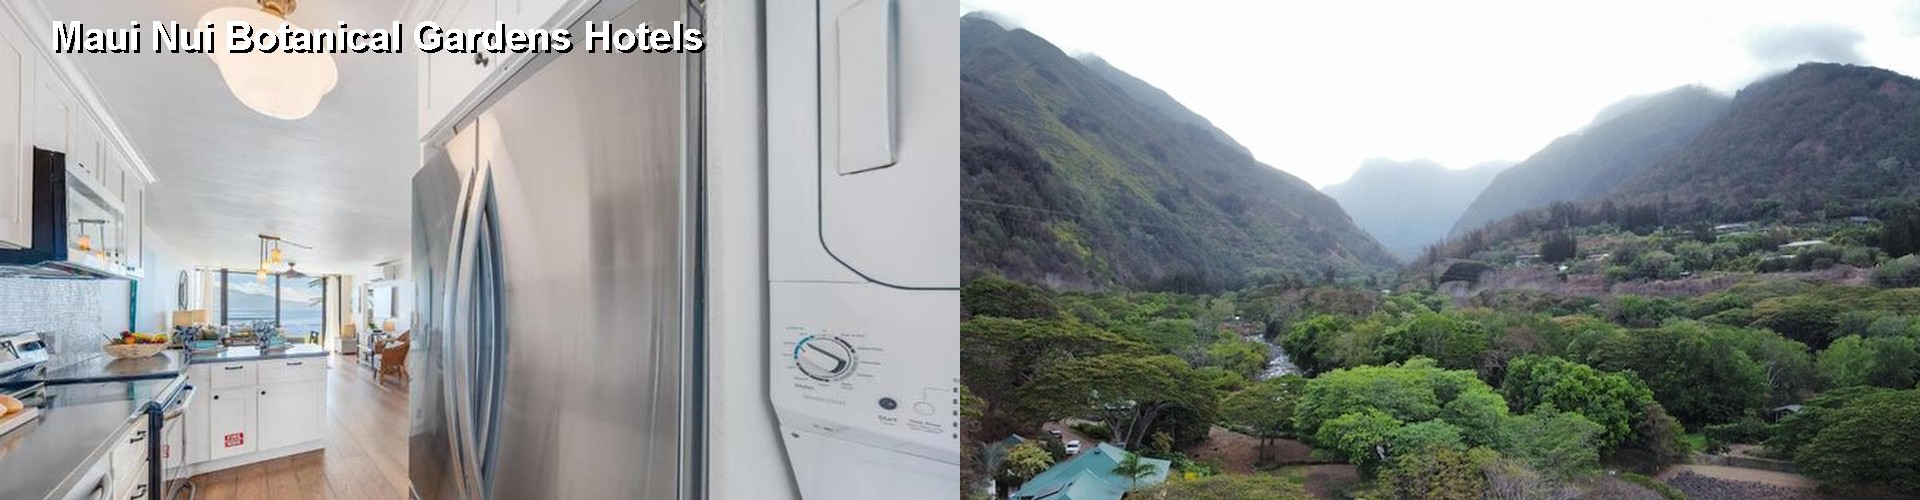 5 Best Hotels near Maui Nui Botanical Gardens